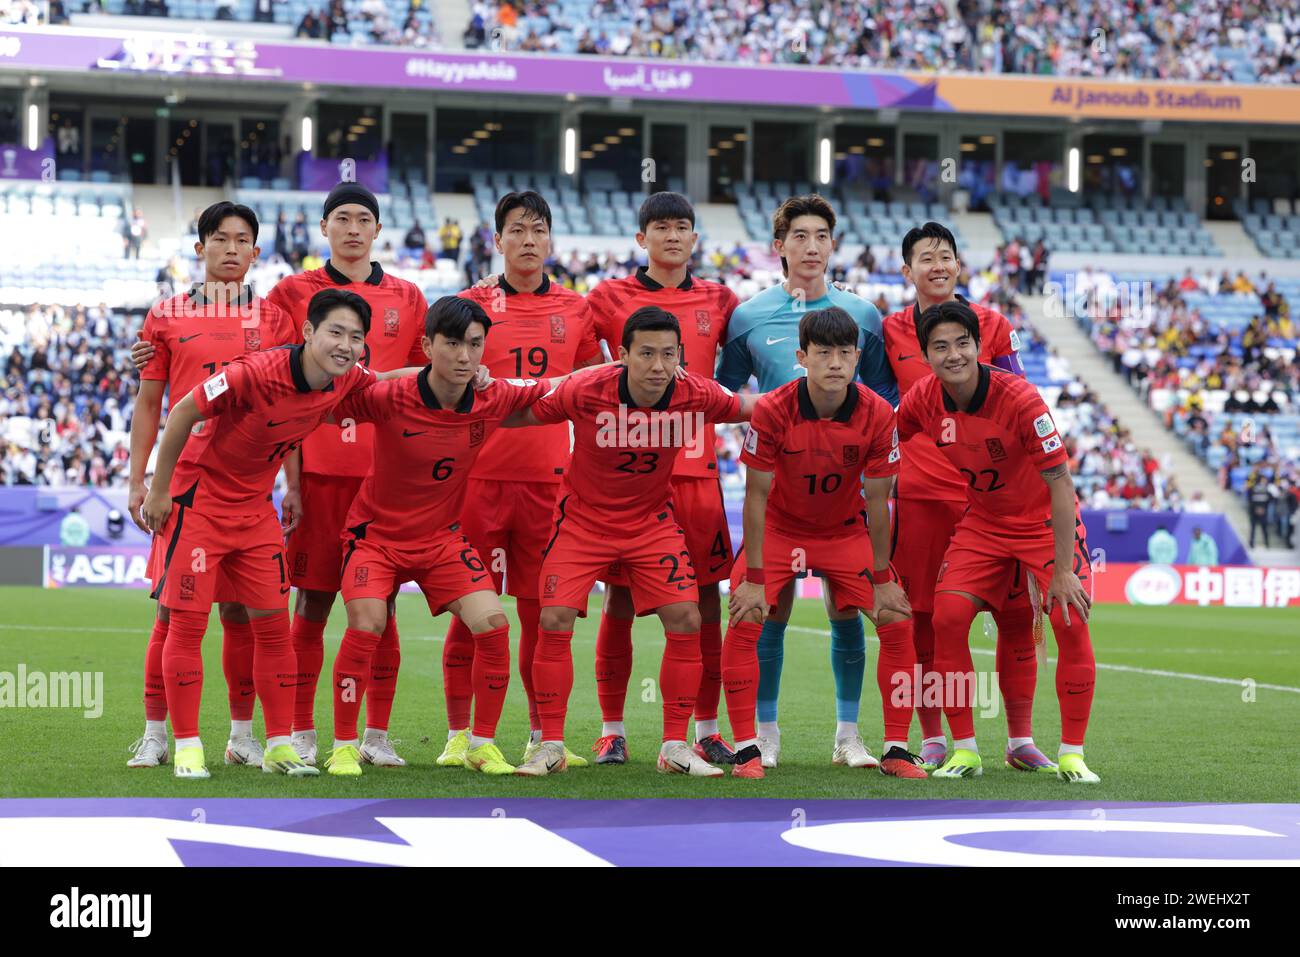 AL WAKRAH, QATAR - JANUARY 25: players of South Korea national team pose for team photo Jung Seung-hyun, Cho Gue-sung, Kim Young-gwon, Kim Min-jae, Jo Stock Photo